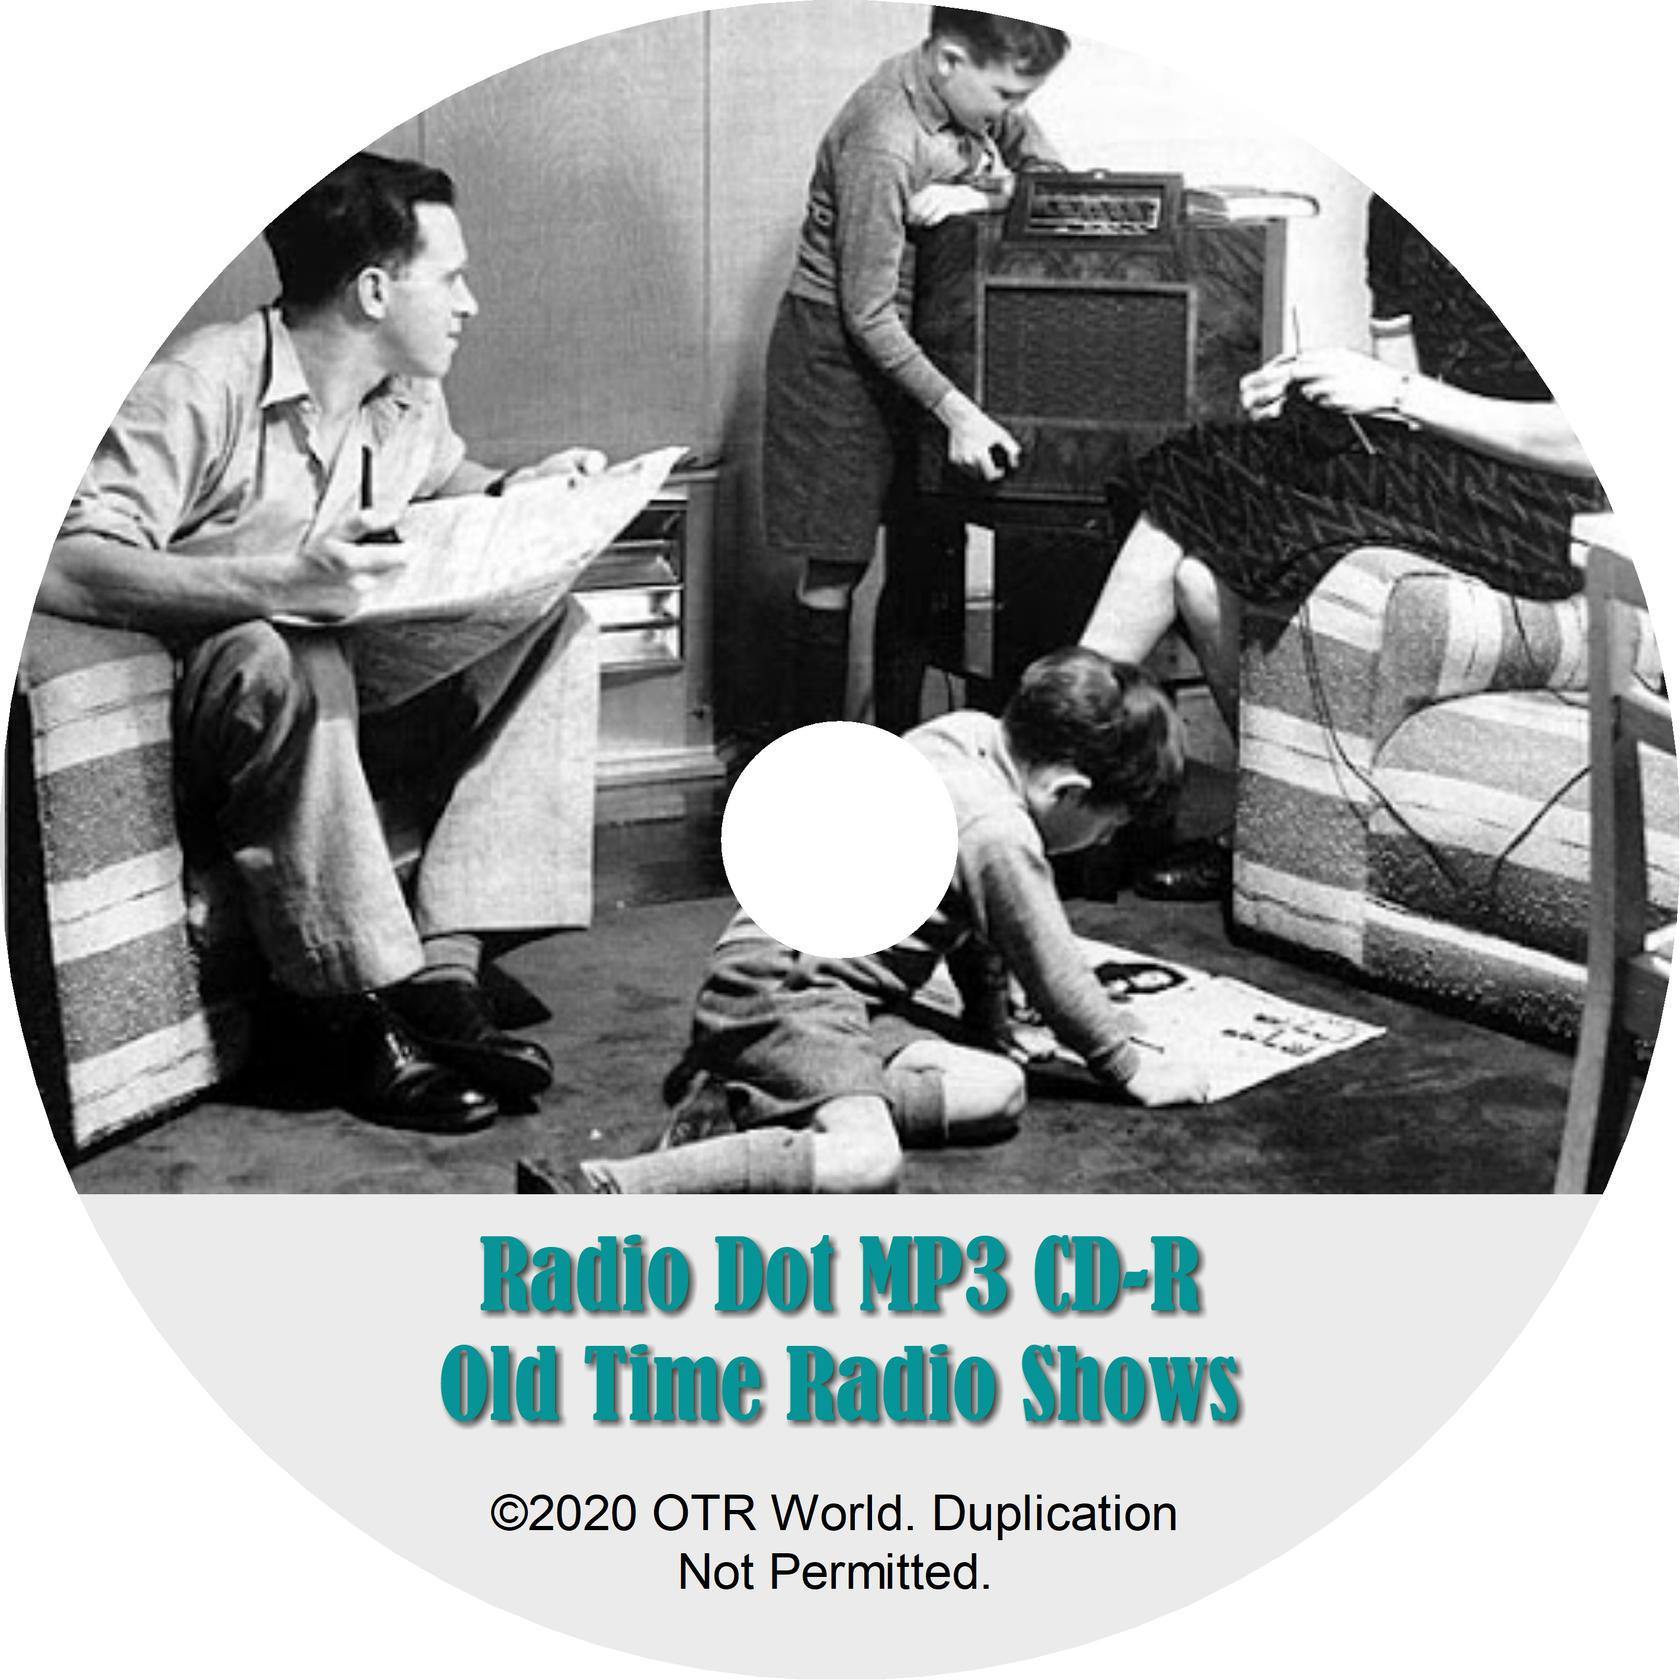 Radio Dot Old Time Radio Shows MP3 CD-R OTR OTRS 2 Episodes - OTR World